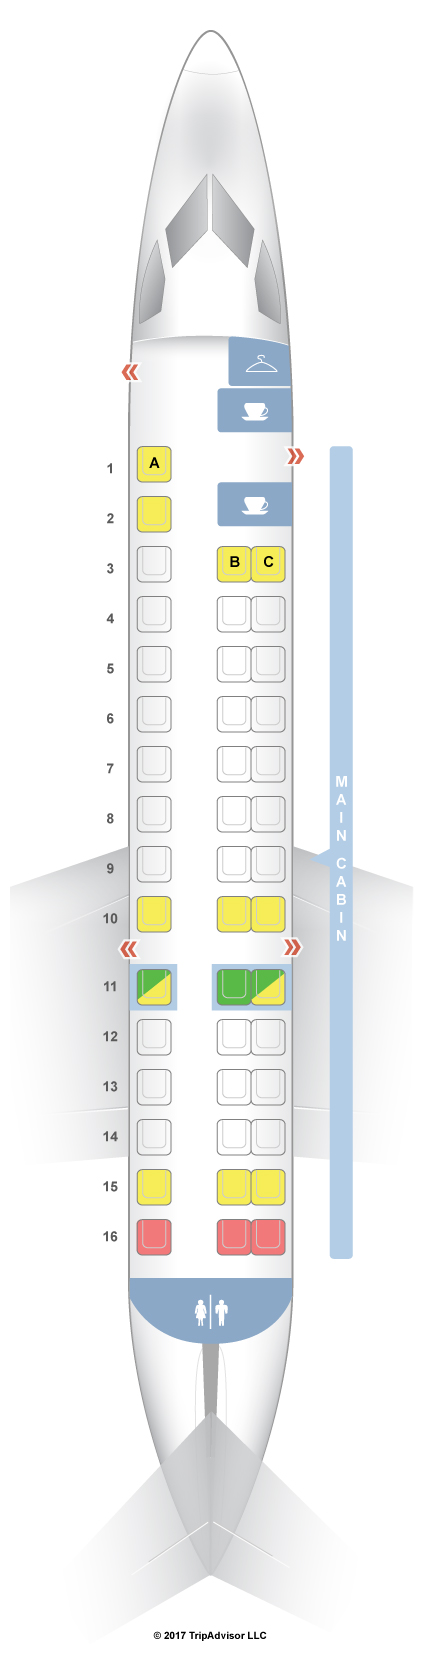 Embraer Rj135 Seating Chart United